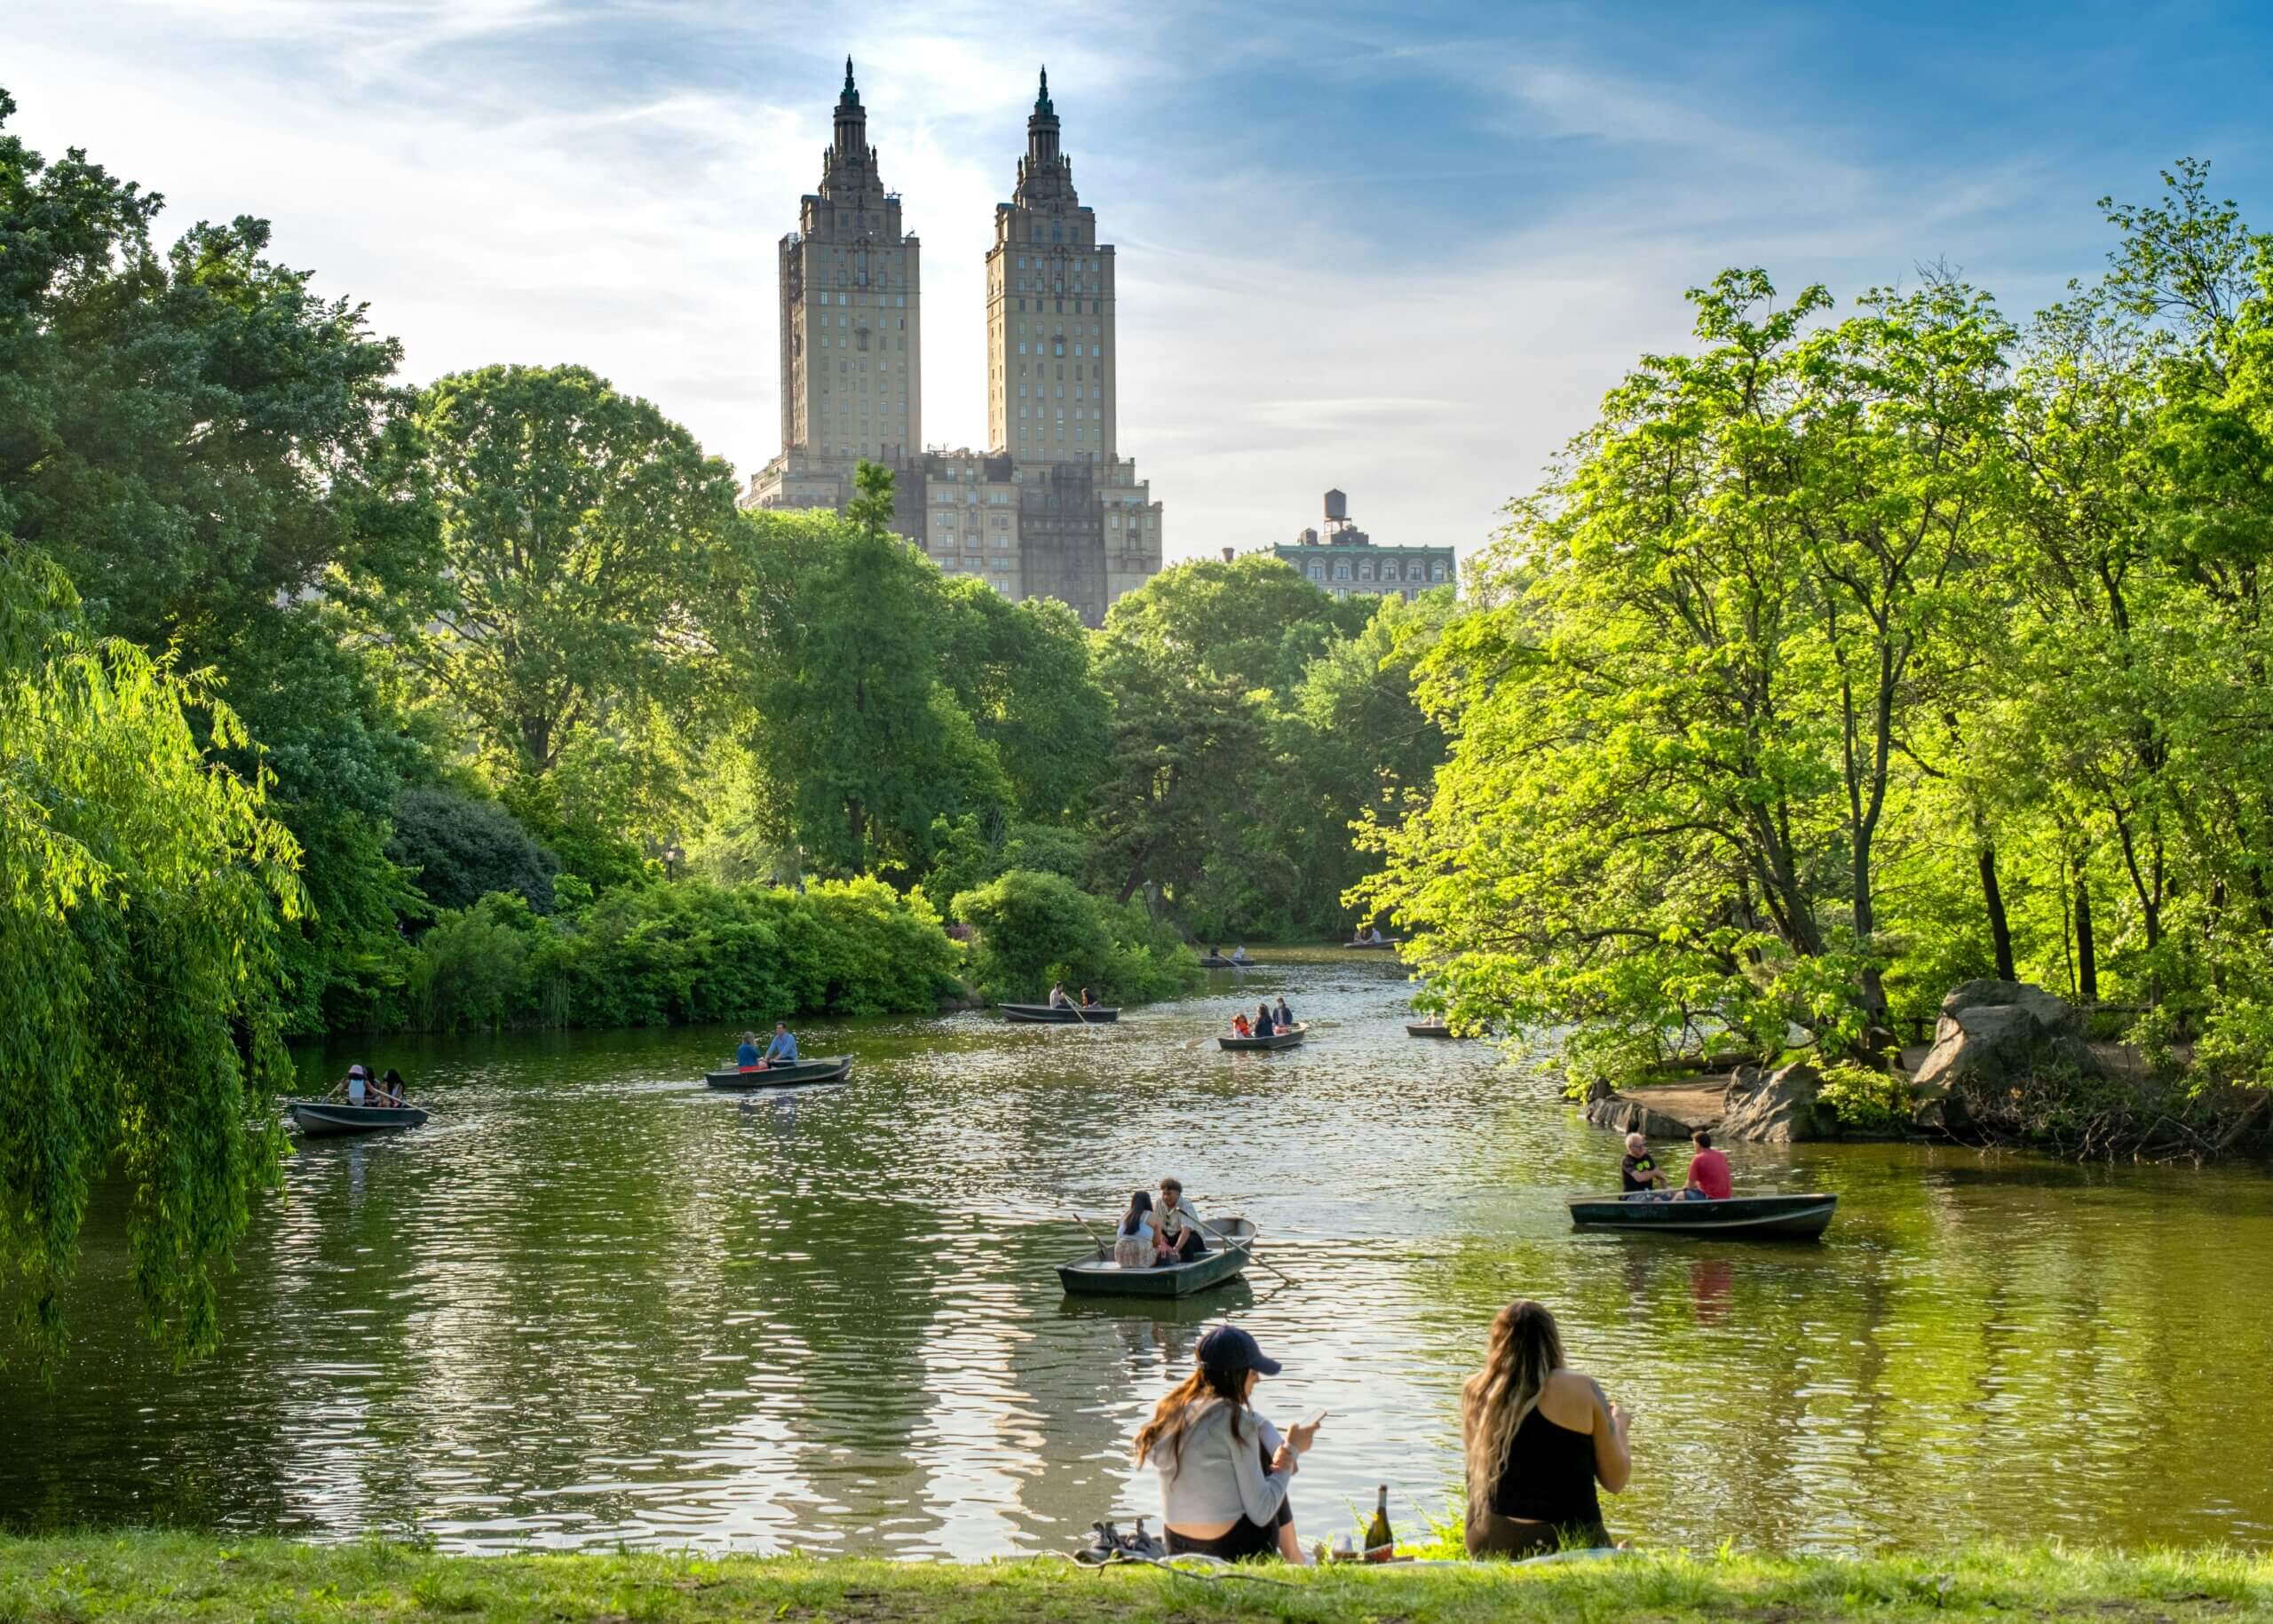 Central Park pod with row boats